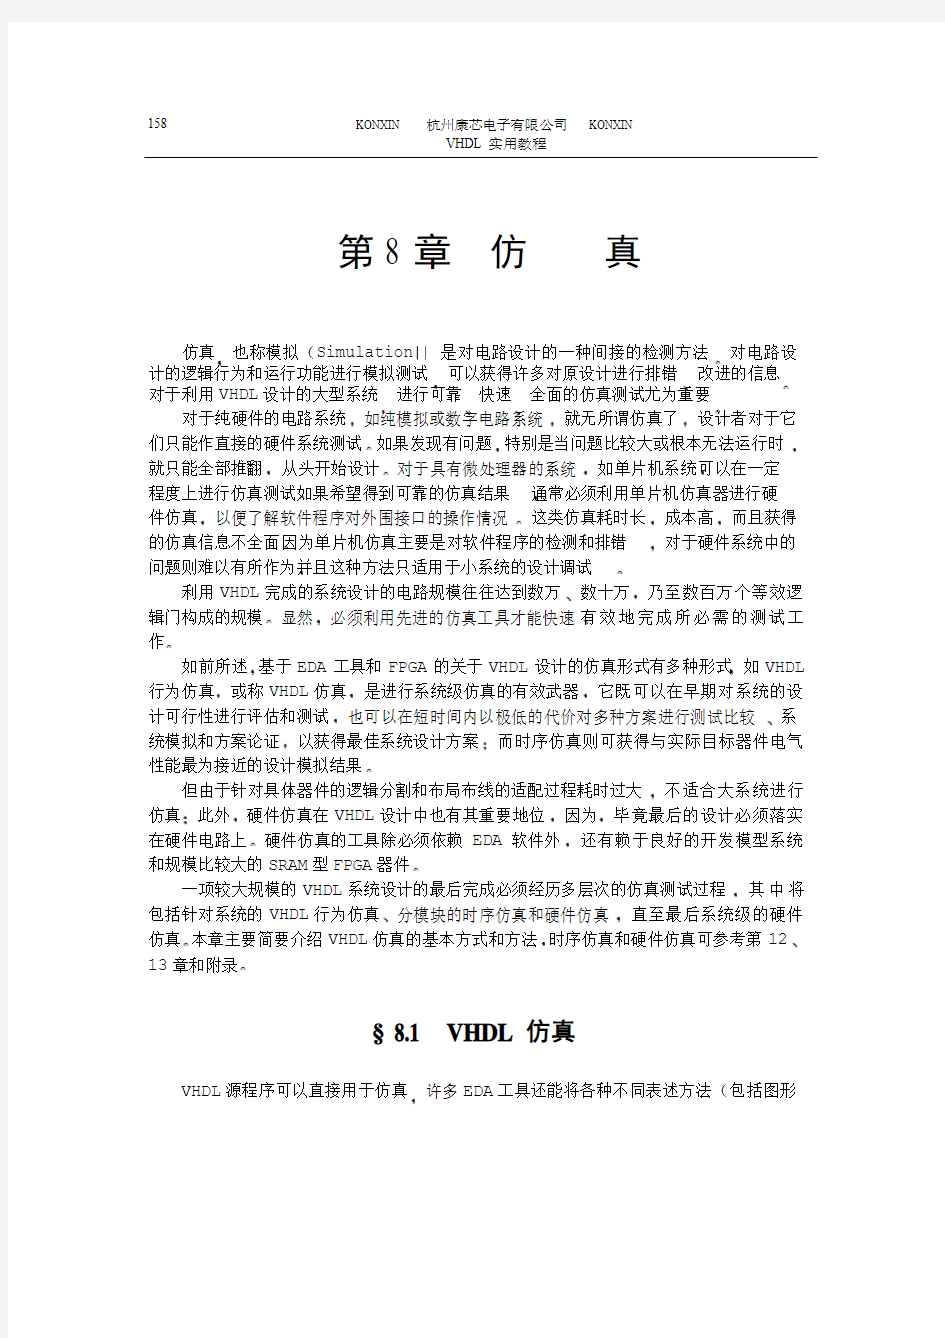 《VHDL实用教程》完整版【汉语版】-10第八章